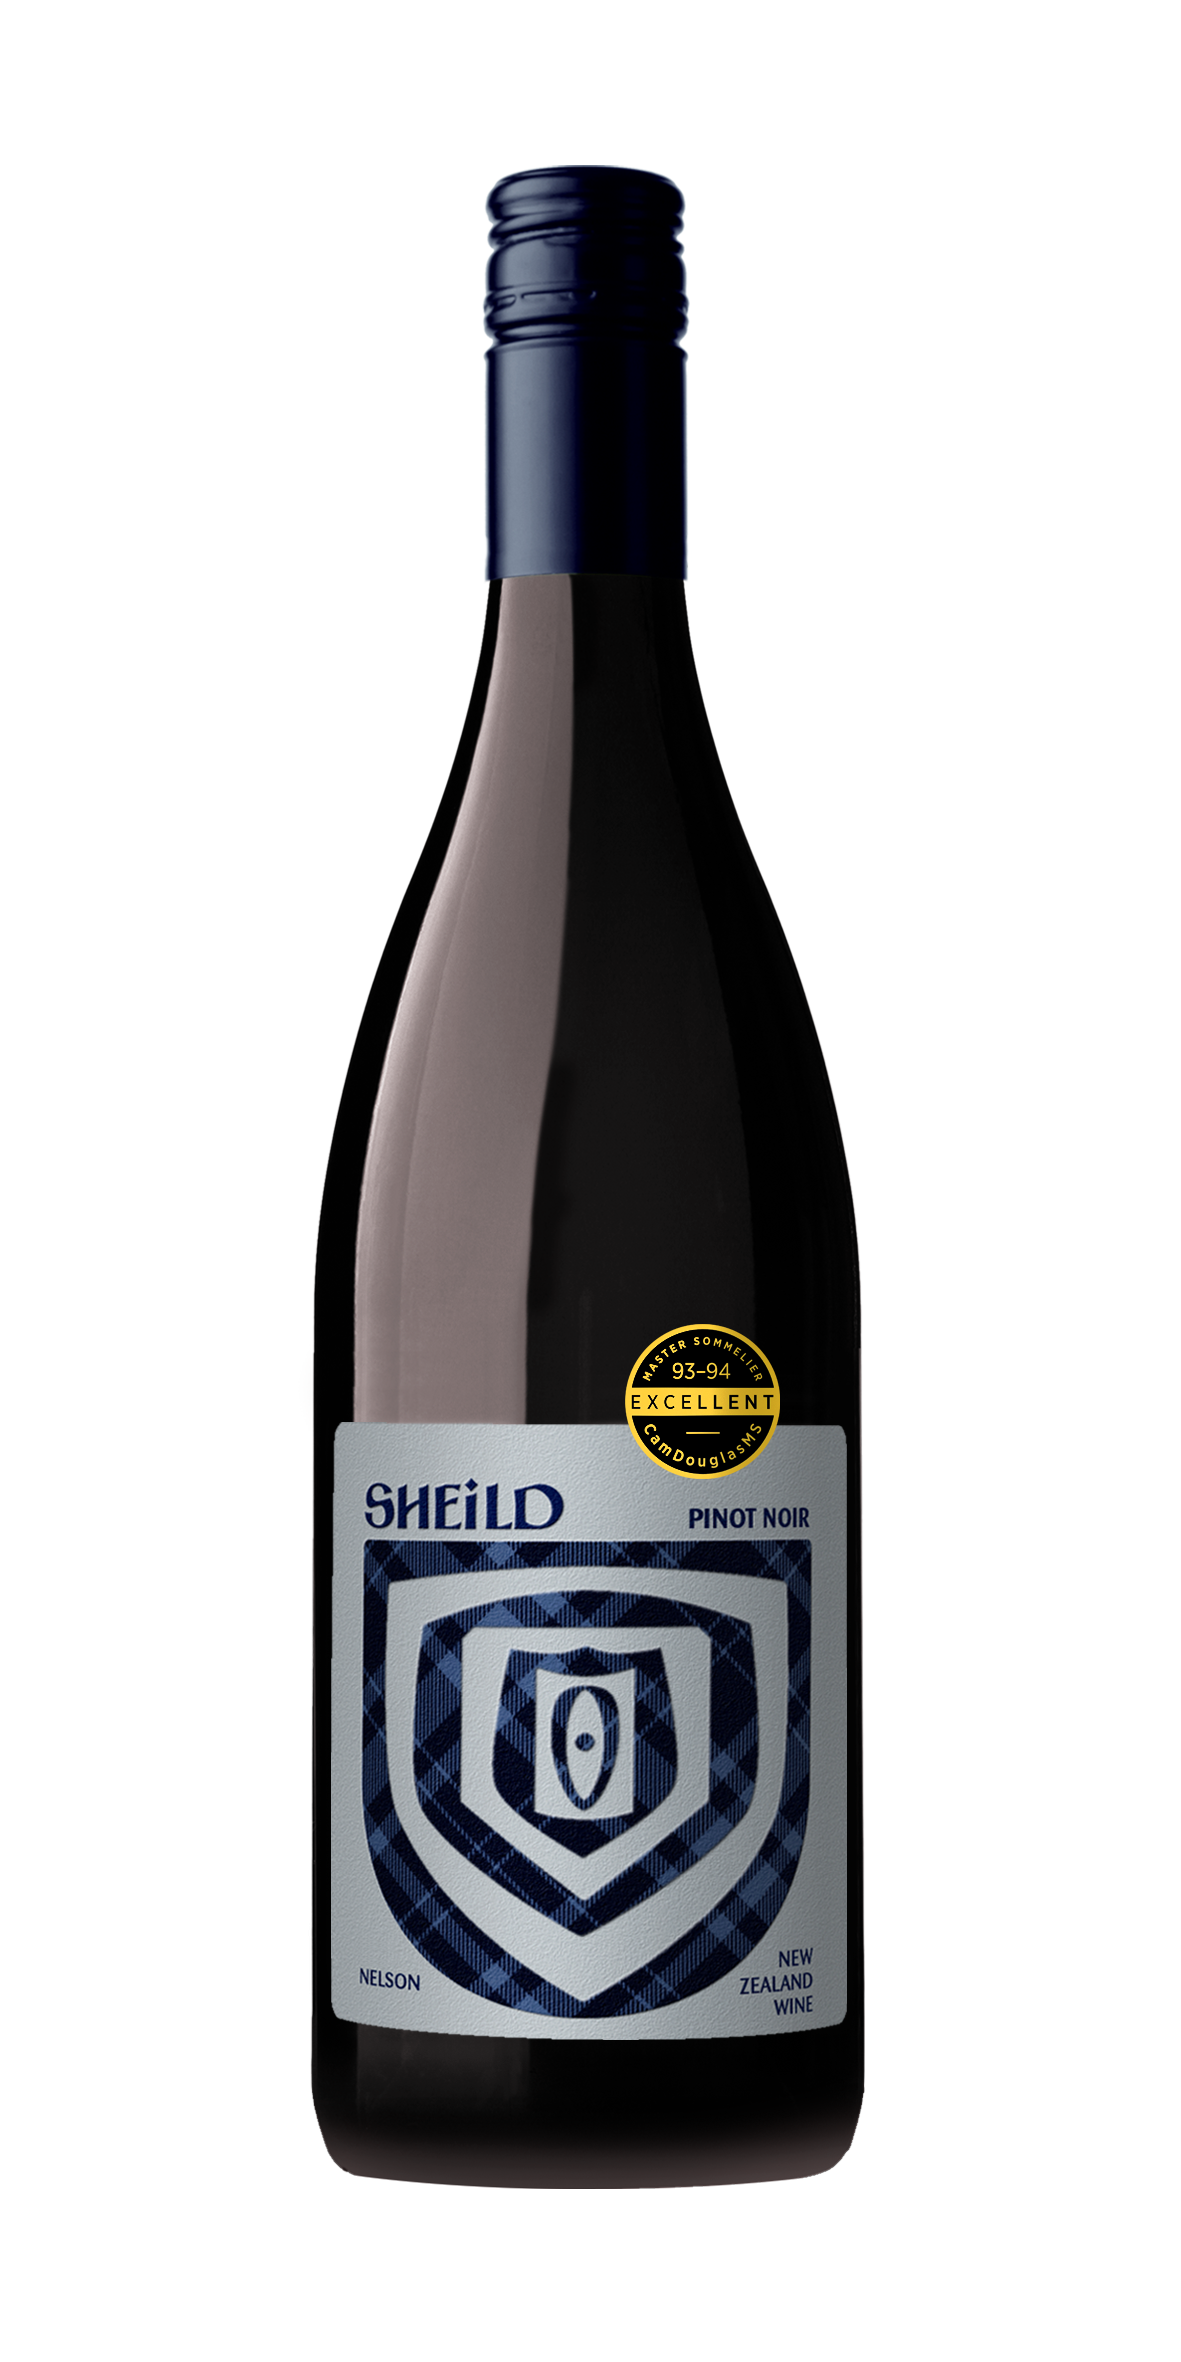 Bottle of SHEiLD's Pinot Noir wine, with blue label and dark blue cap/logo. Cam Douglas award badge. 93-94/100 rating.